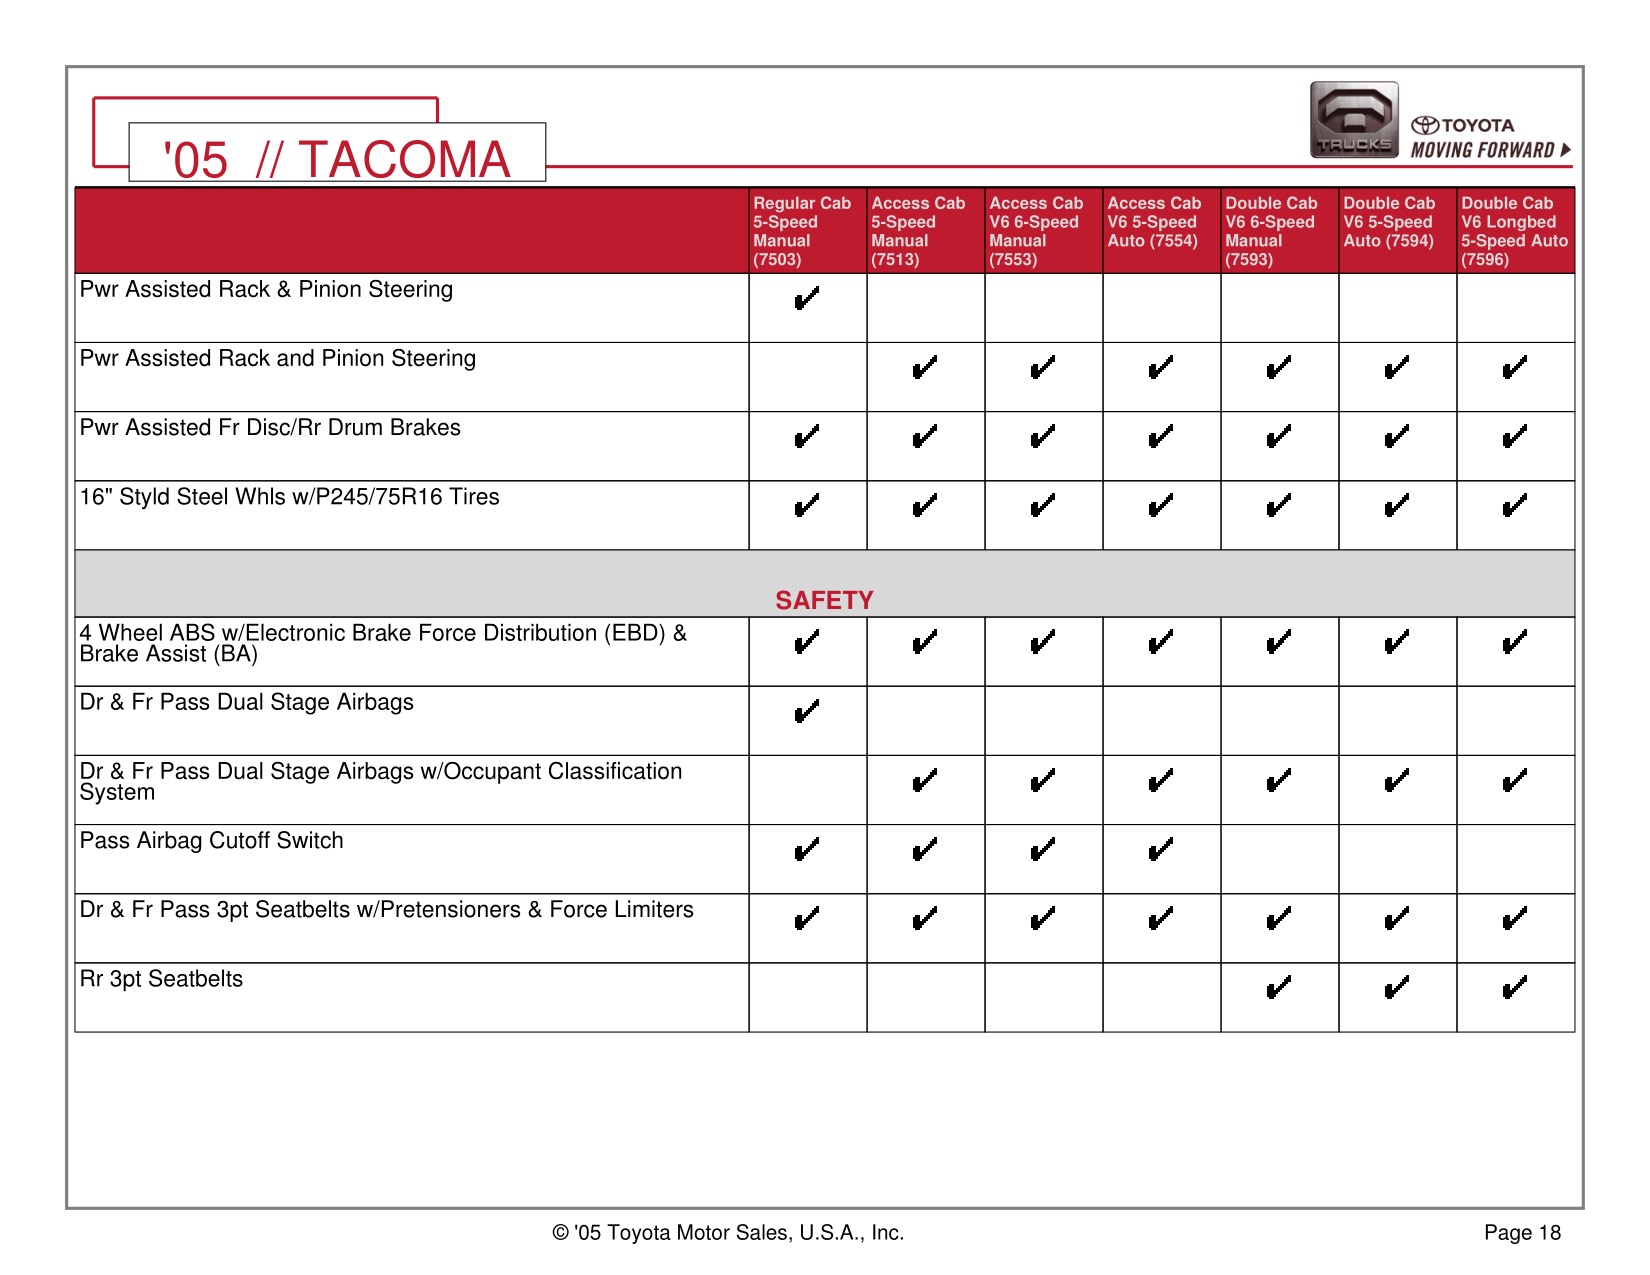 2005 Toyota Tacoma 4x4 Brochure Page 17